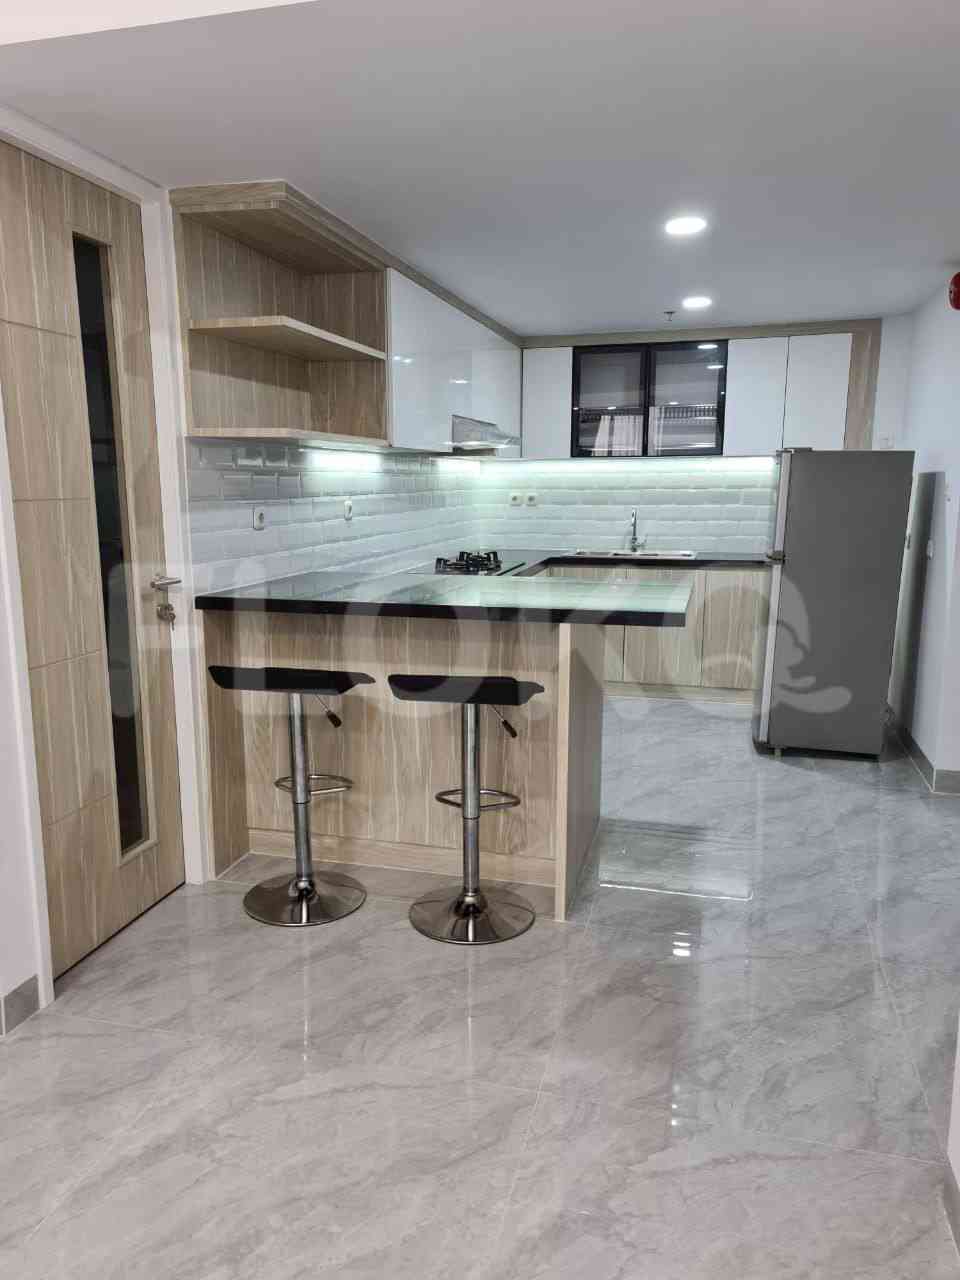 2 Bedroom on 17th Floor for Rent in Taman Anggrek Residence - ftab59 6